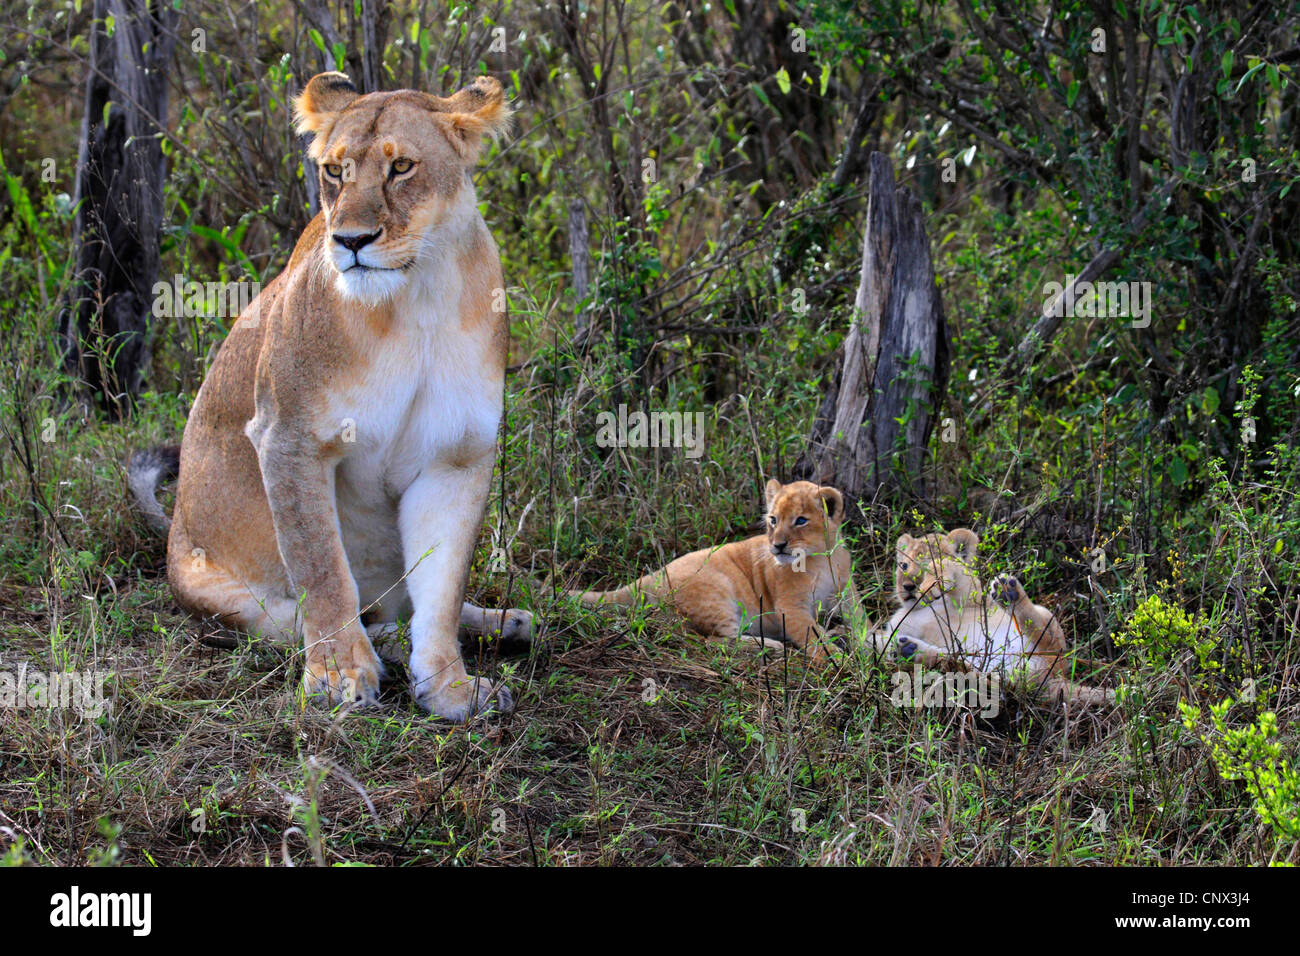 Lion (Panthera leo), leonessa seduto in erba con due gattini, Kenia Masai Mara National Park Foto Stock